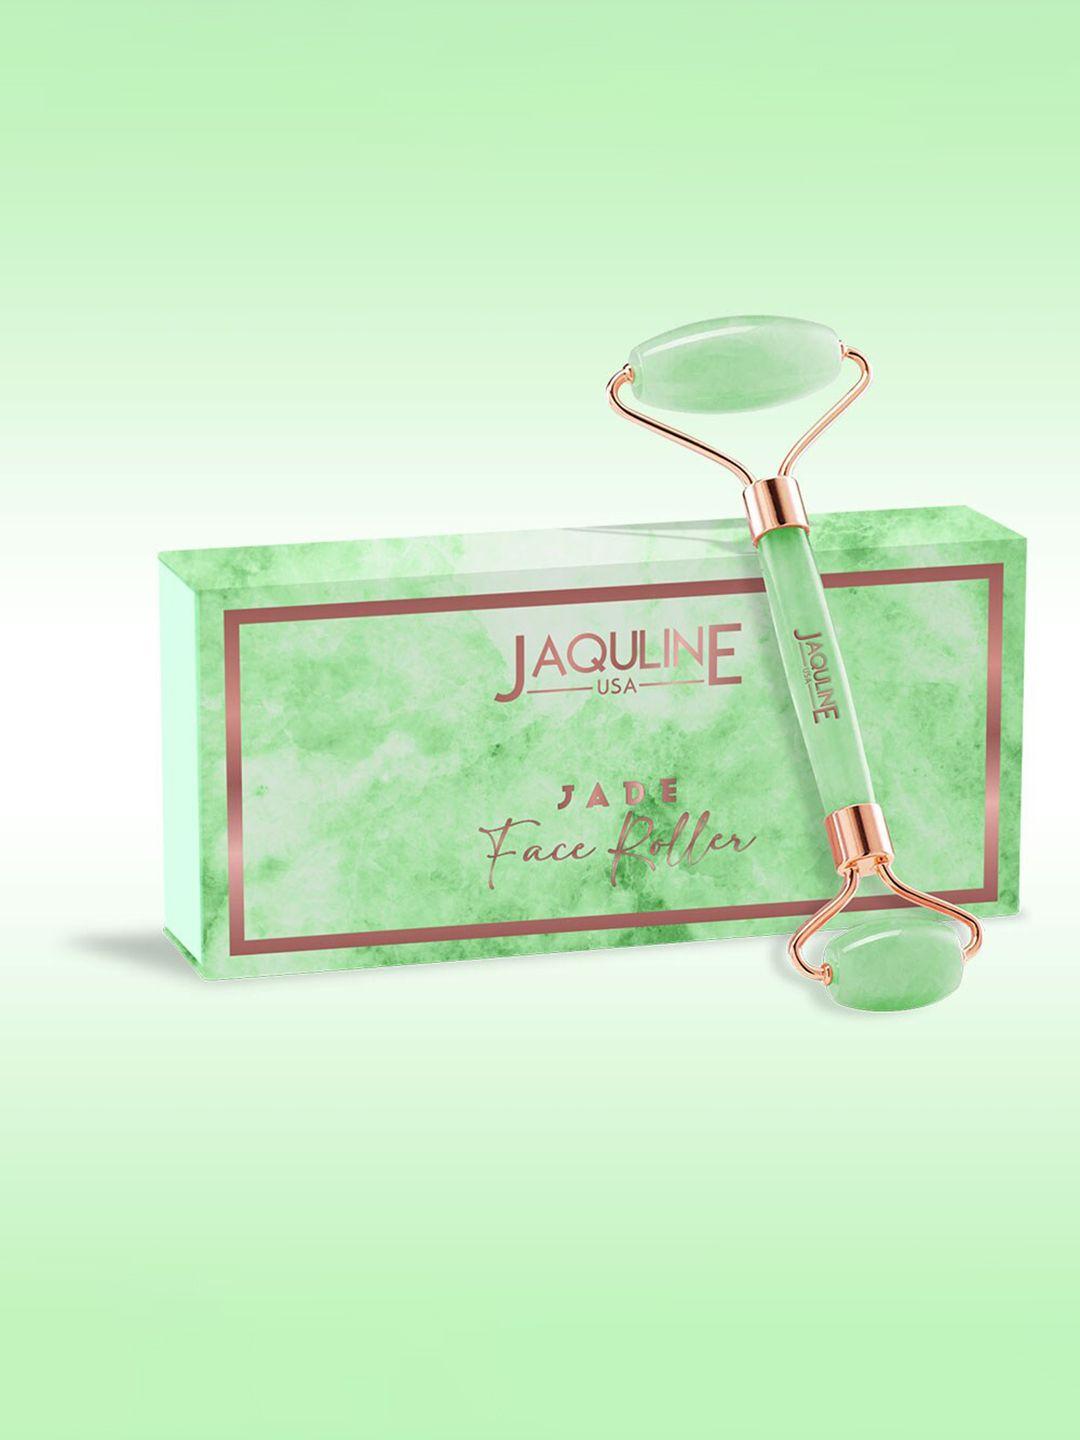 jaquline usa northern jade face roller